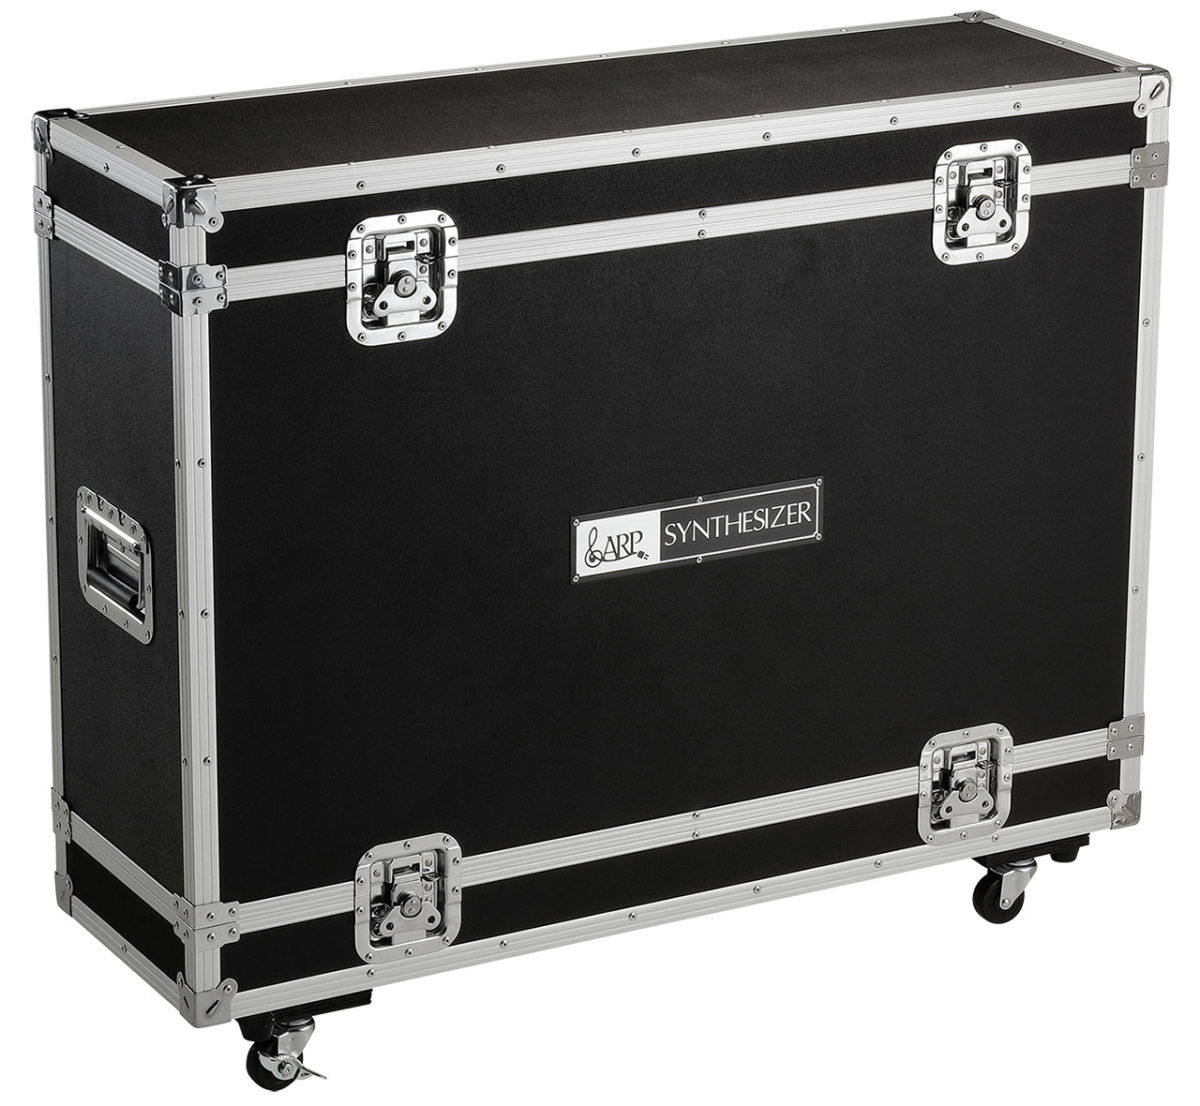 A lo grande: Korg ARP 2600 FS necesita esta inmensa caja dedicada para su transporte seguro